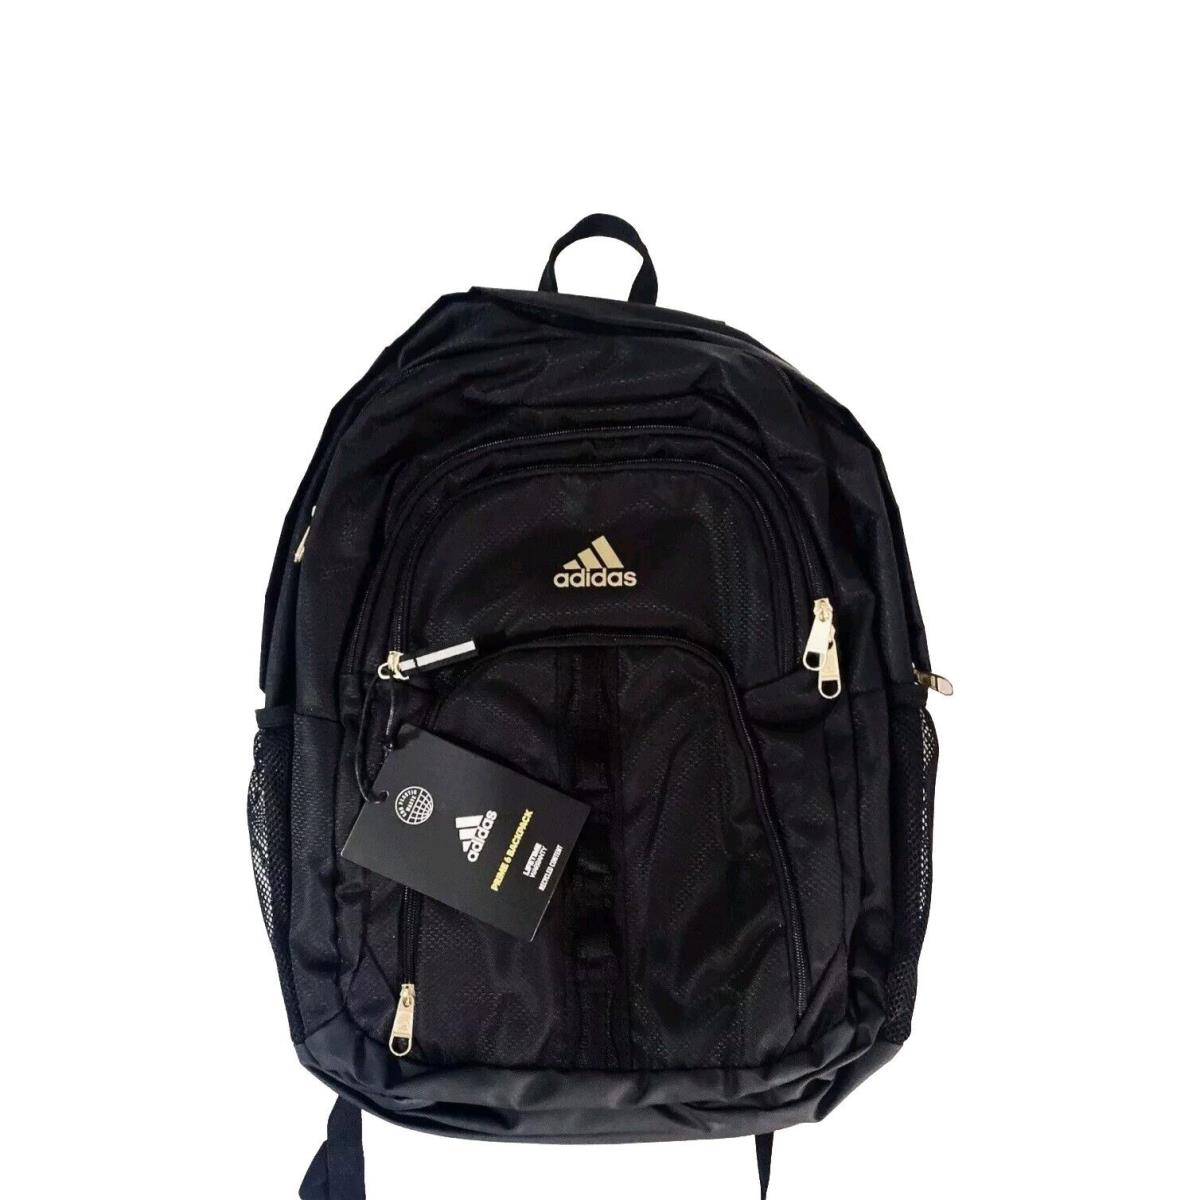 Adidas Unisex Prime 6 Backpack Black with Gold Logo